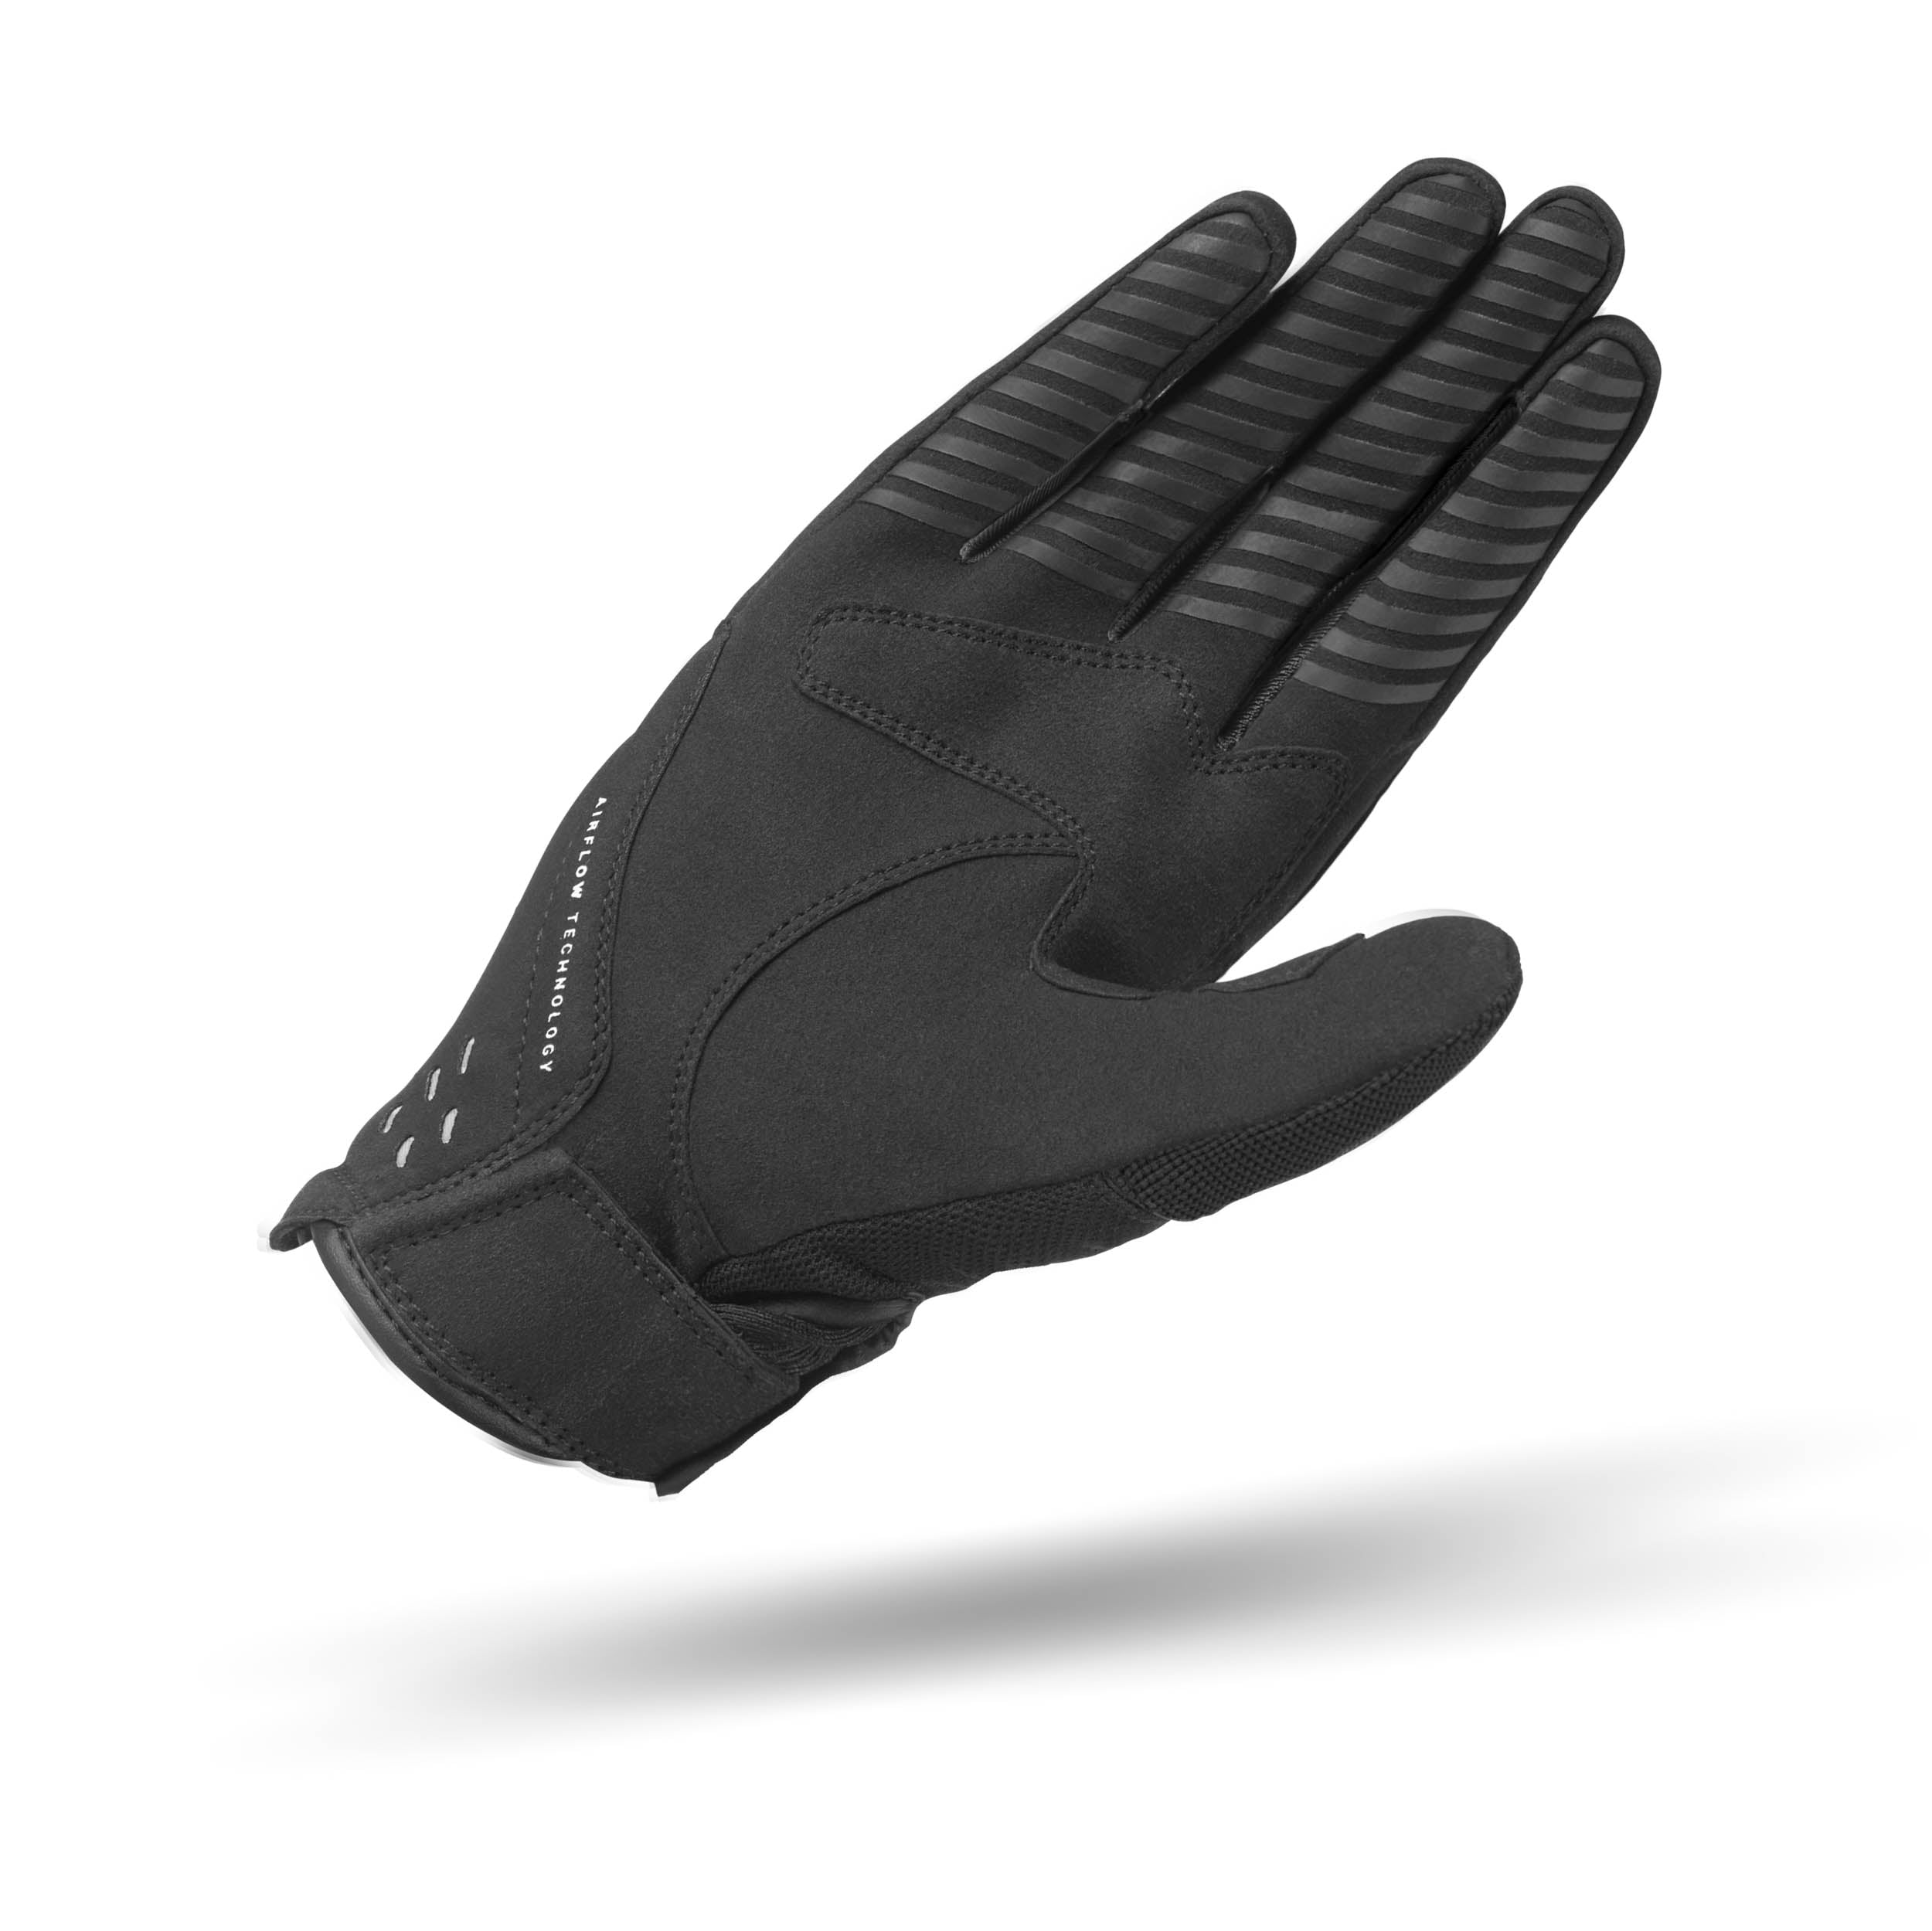 A palm of Shima One Evo black women's motorcycle glove